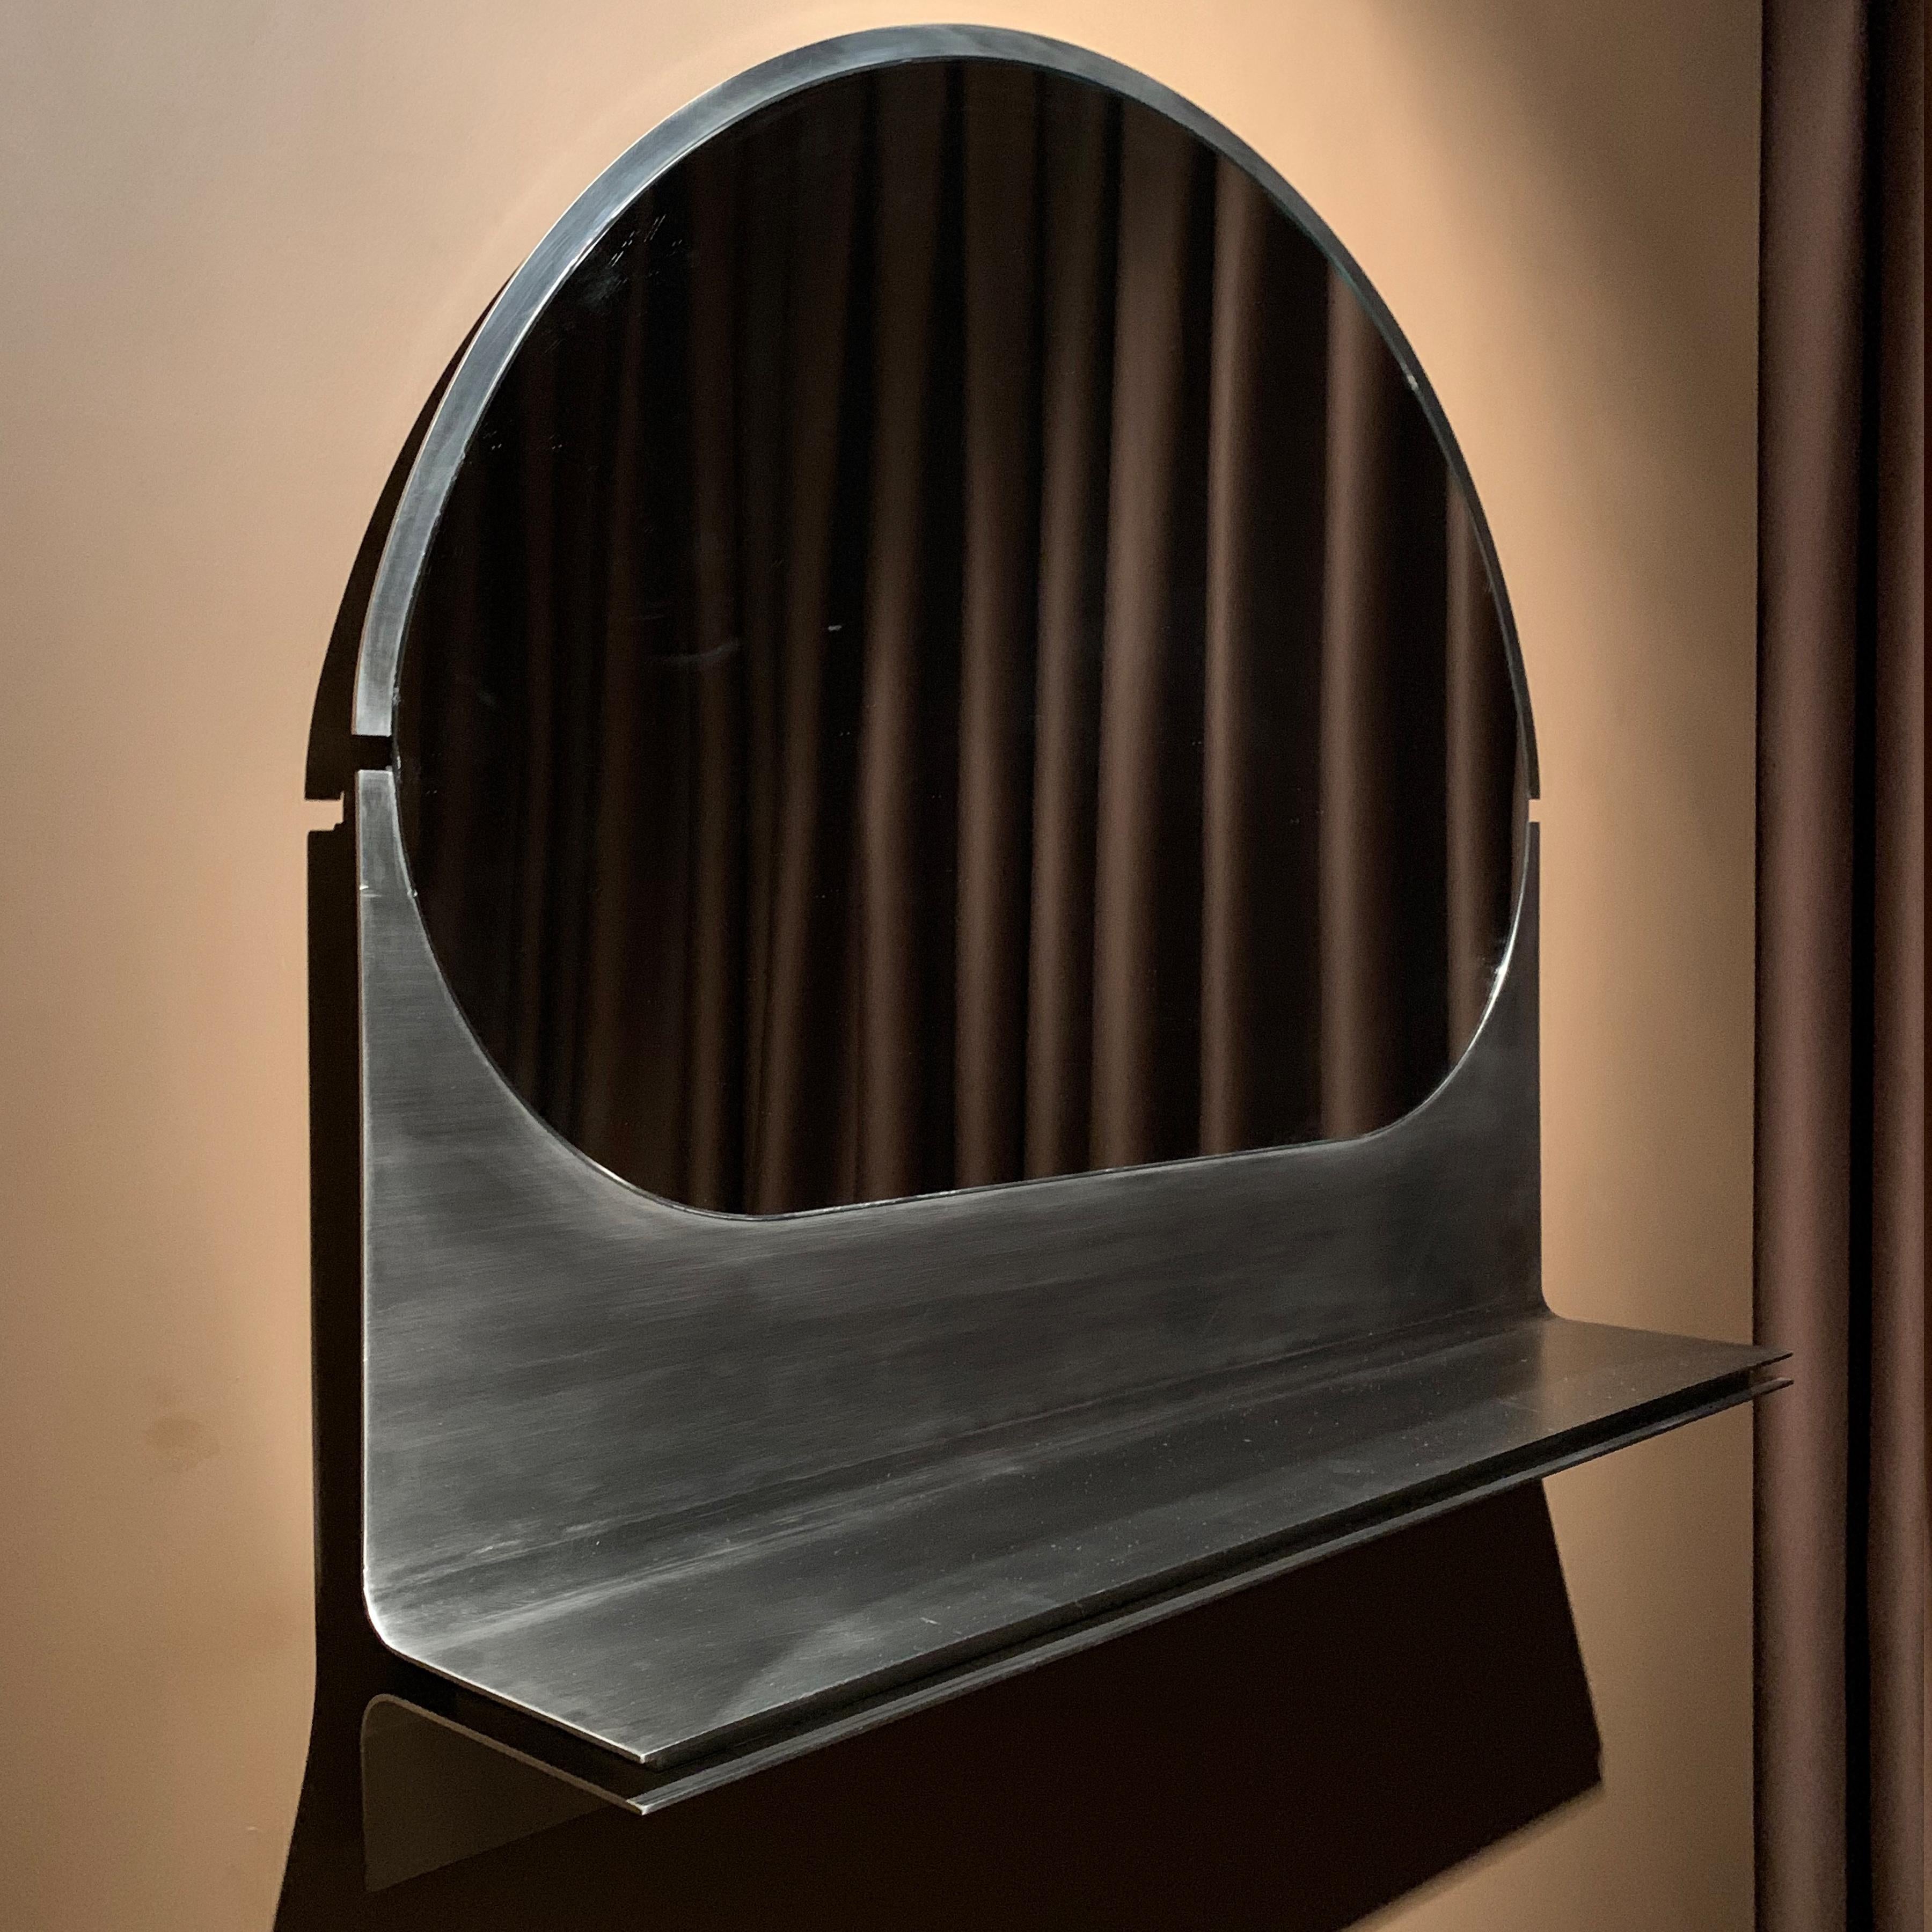 Turkish Bend Mirror with Shelf by Buket Hoşcan Bazman